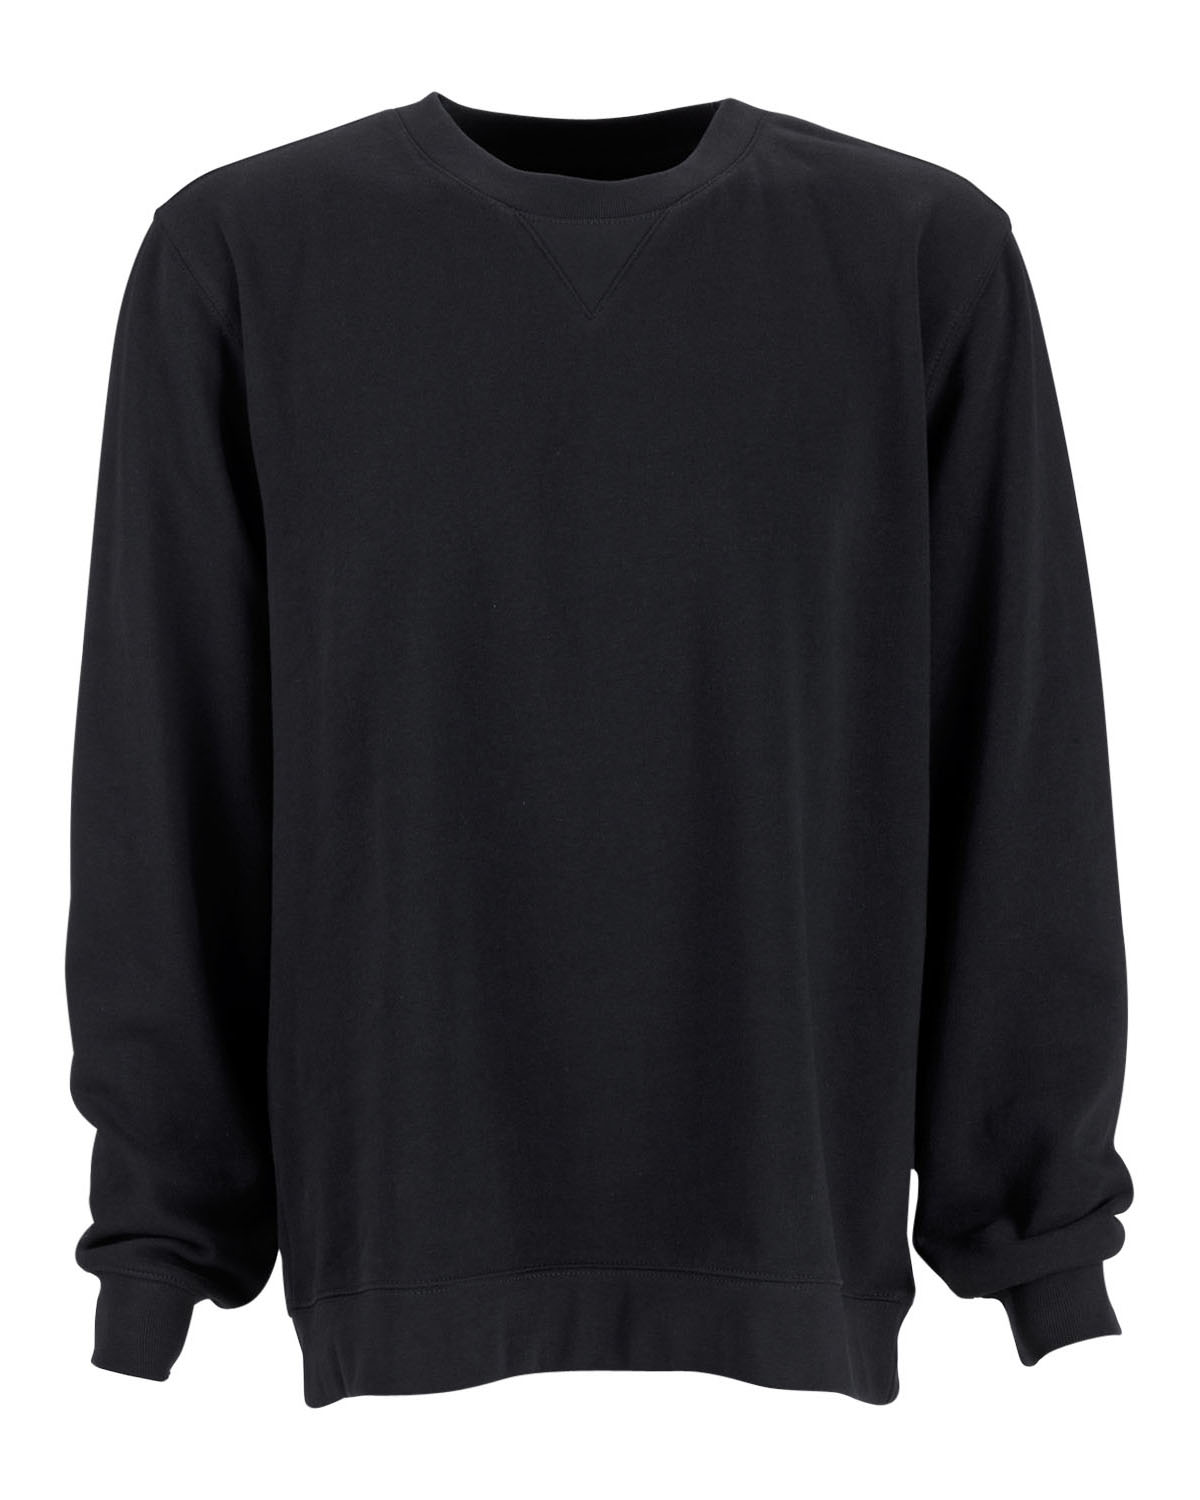 'Vantage 3285 Premium Crewneck Sweatshirt'